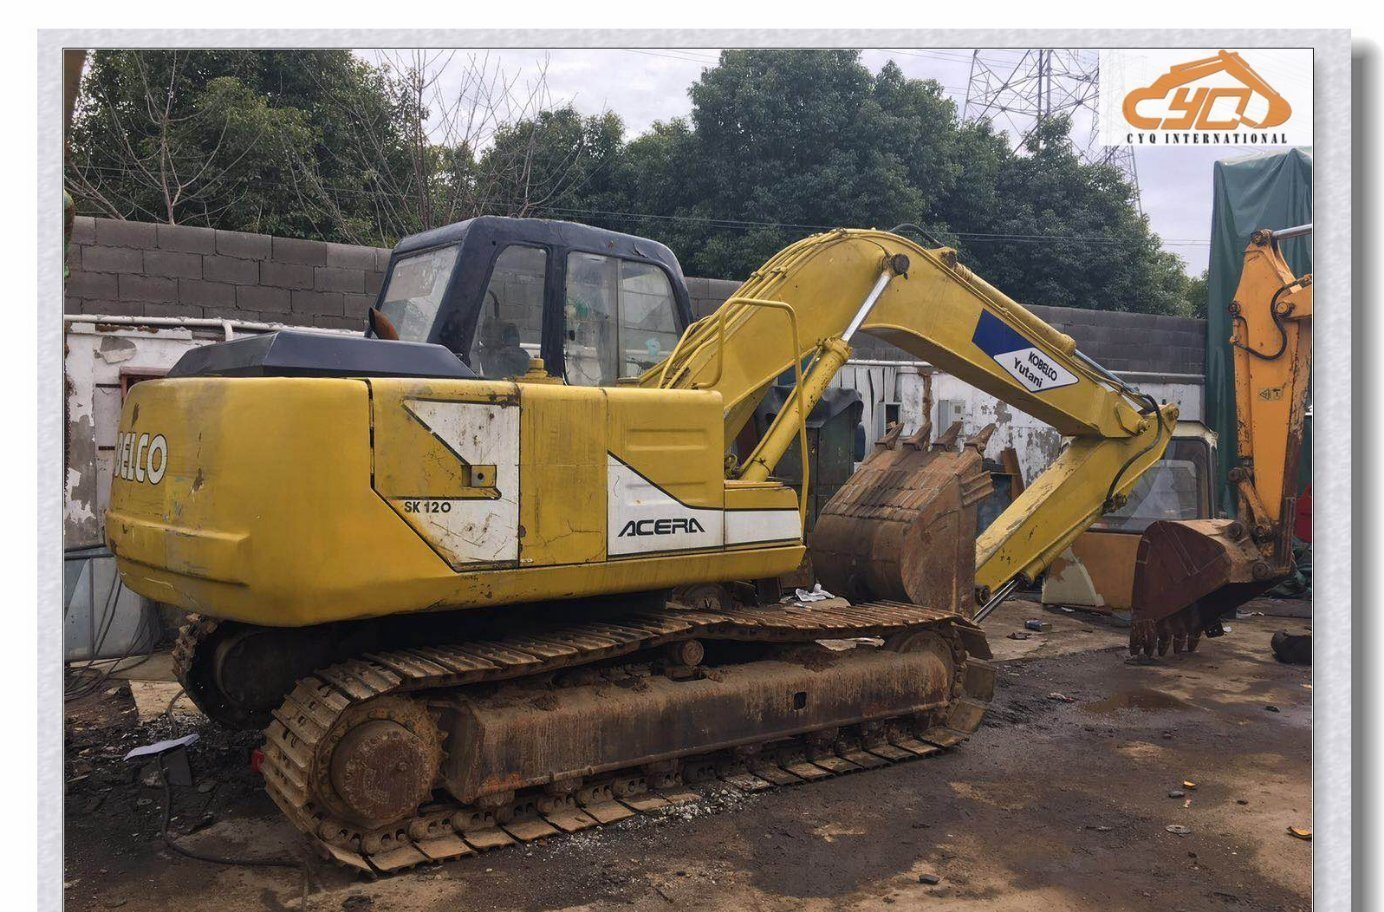 Japan Original Used Kobelco Sk120 Excavator, Kobelco Sk200 Excavator for Sale